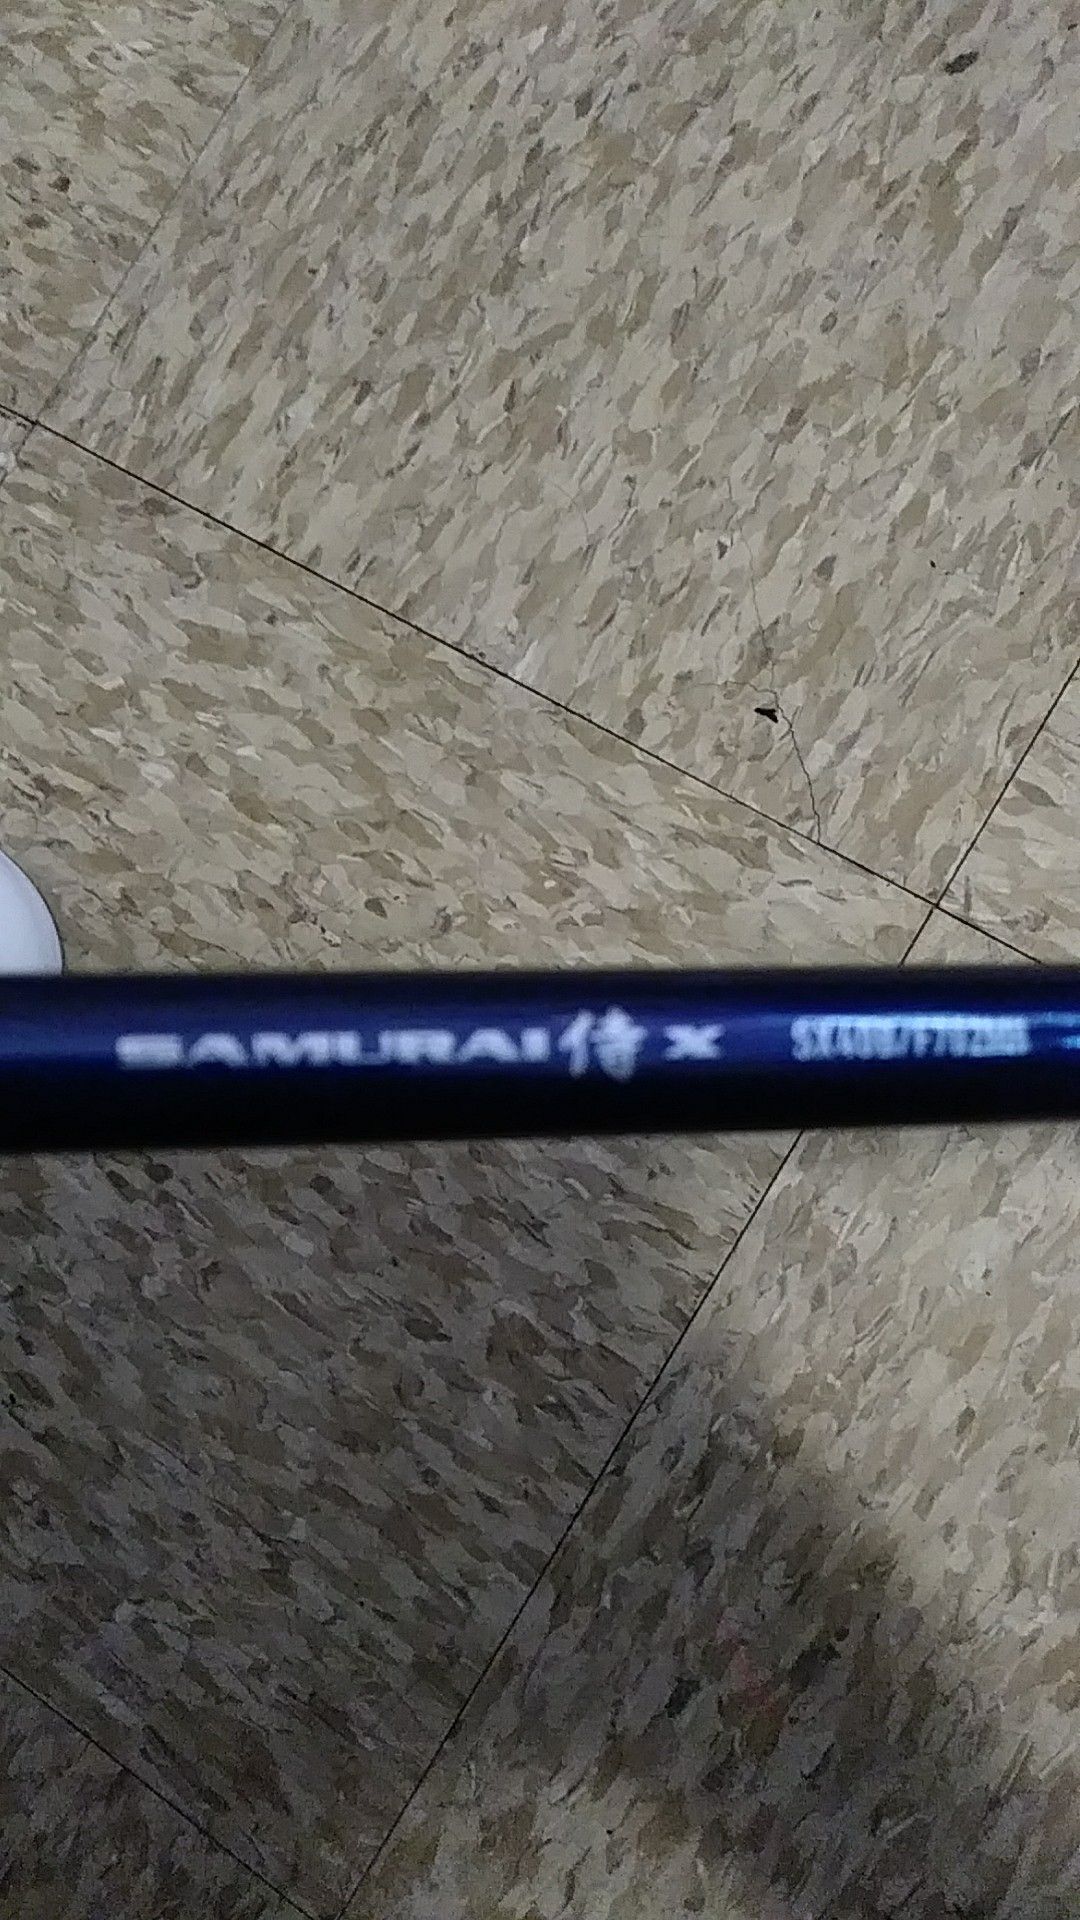 Samurai X SX40B/F702MH Fishing Rod with matching reel.